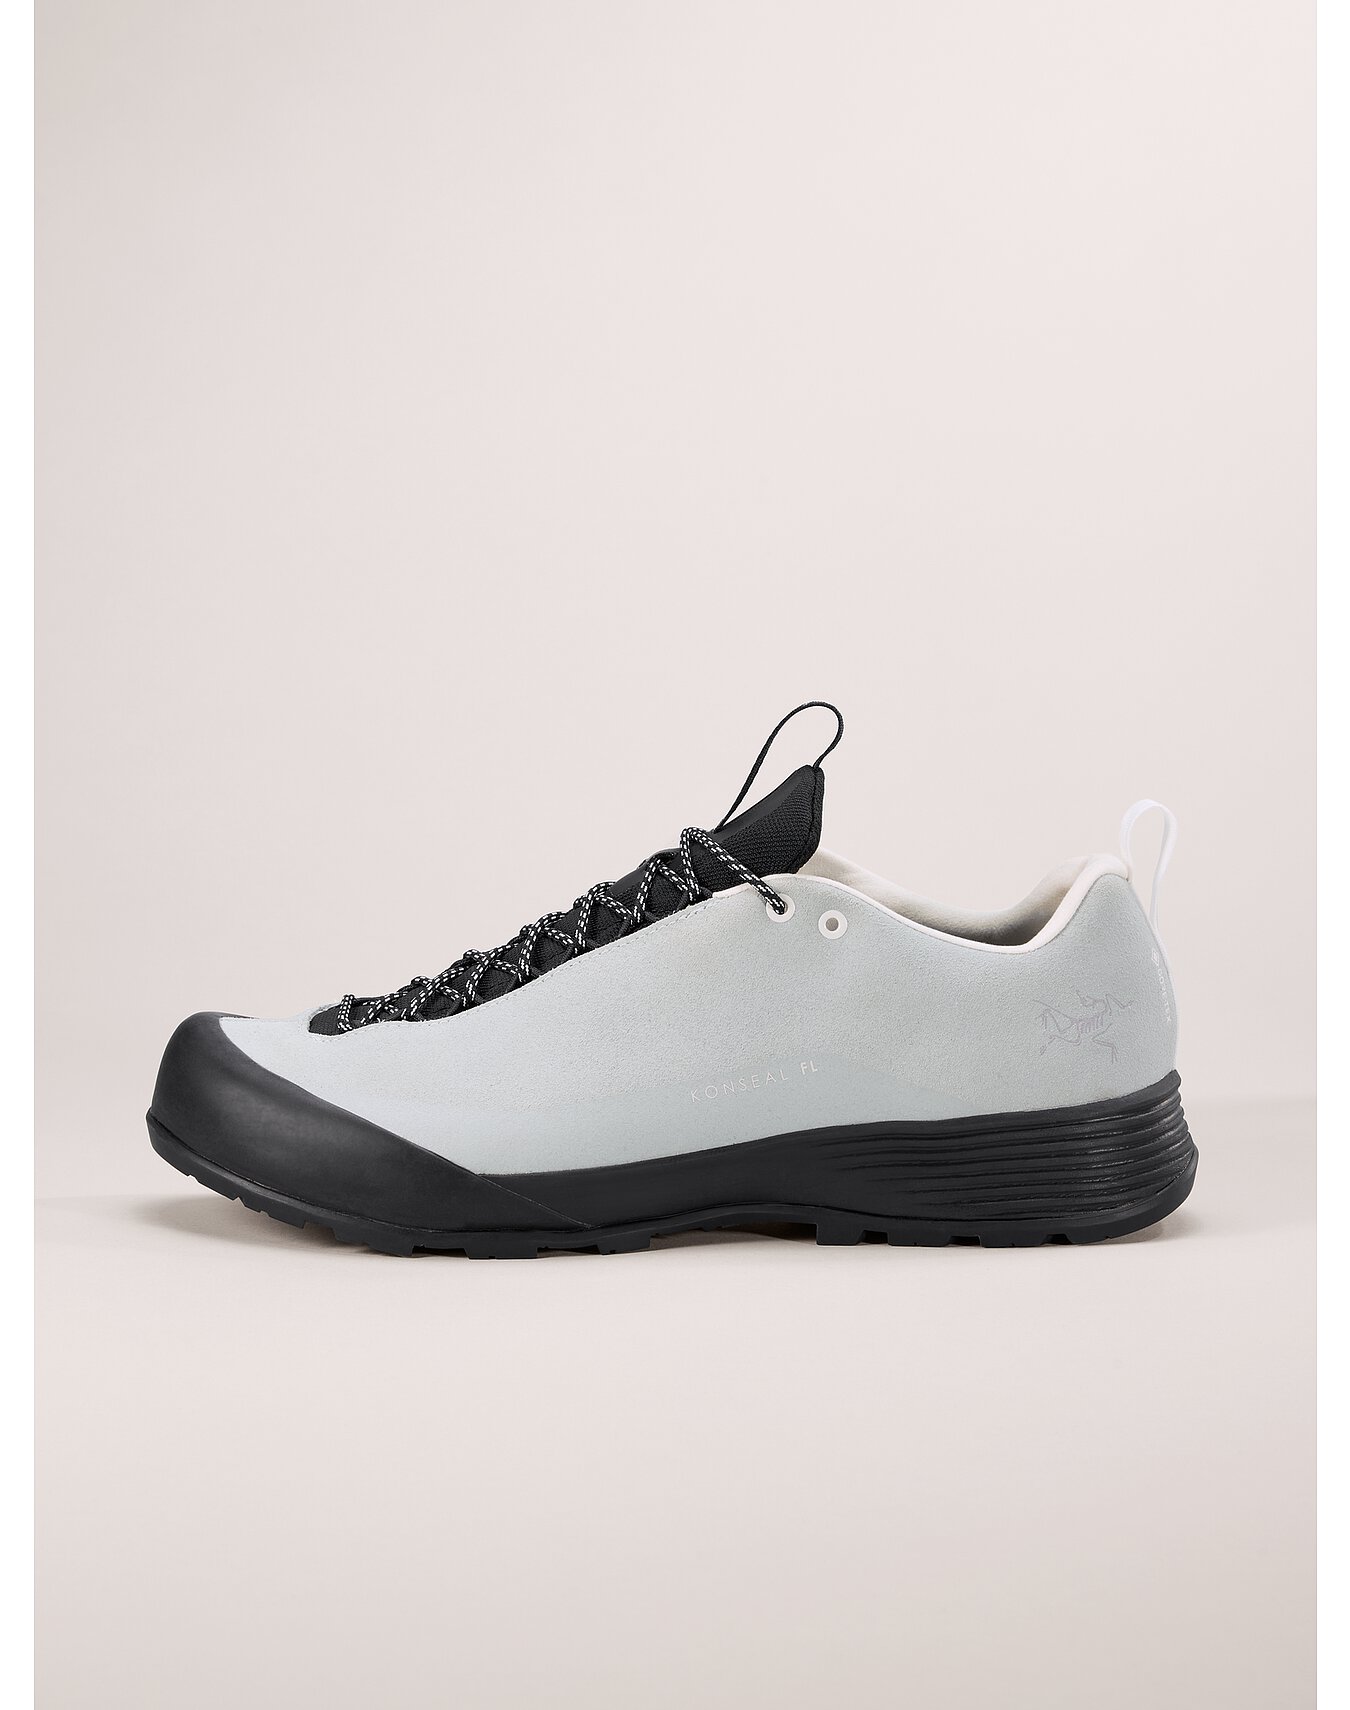 Konseal FL 2 Leather GTX Shoe Men's | Arc'teryx